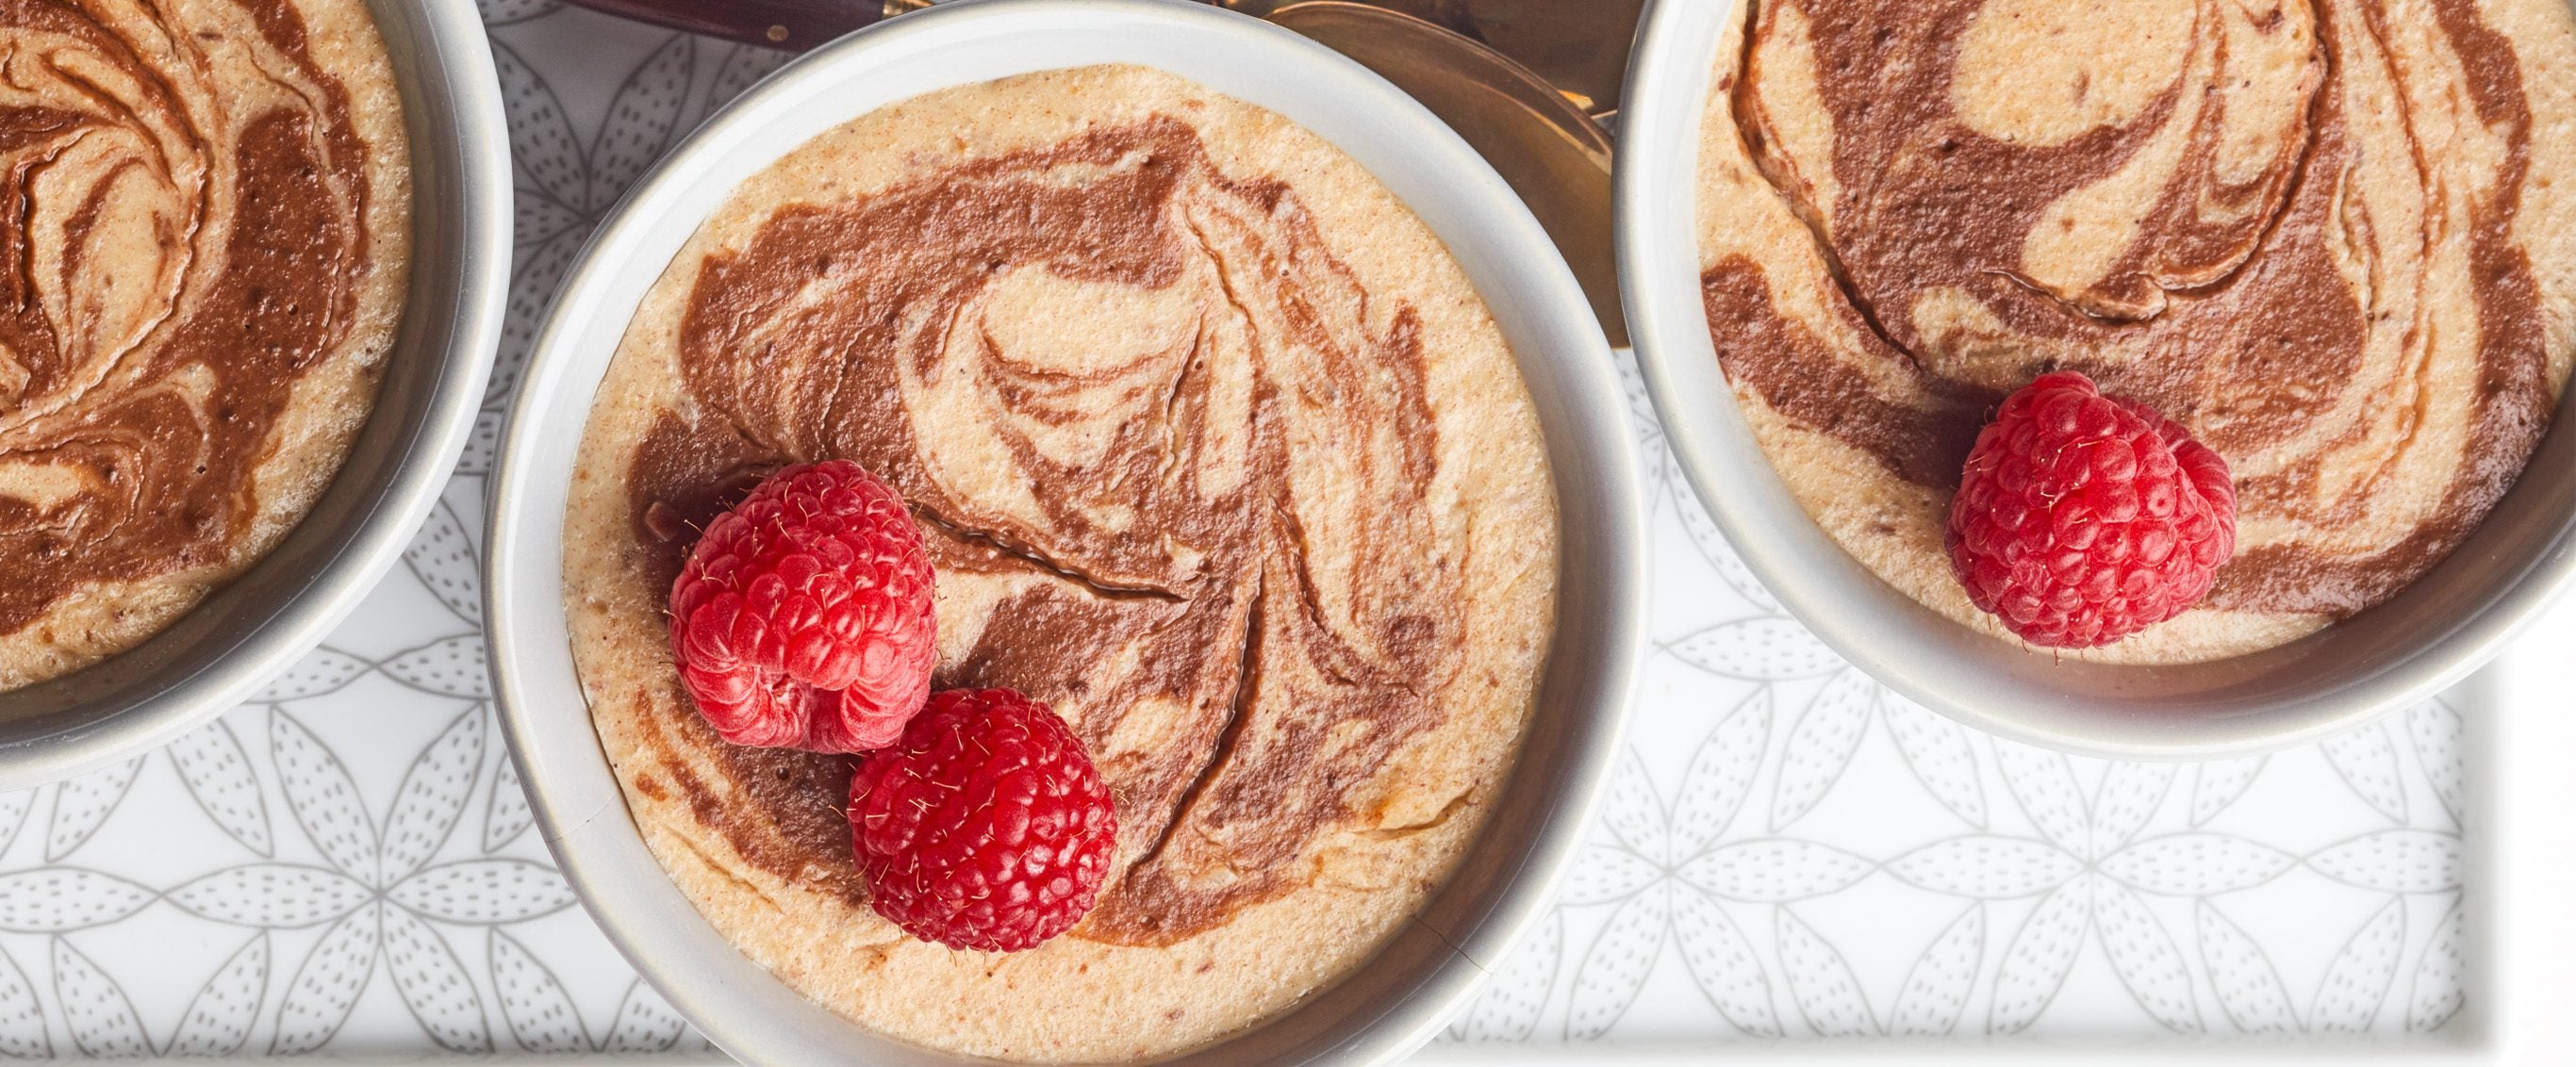 Vegan peanut butter pudding with chocolate swirls